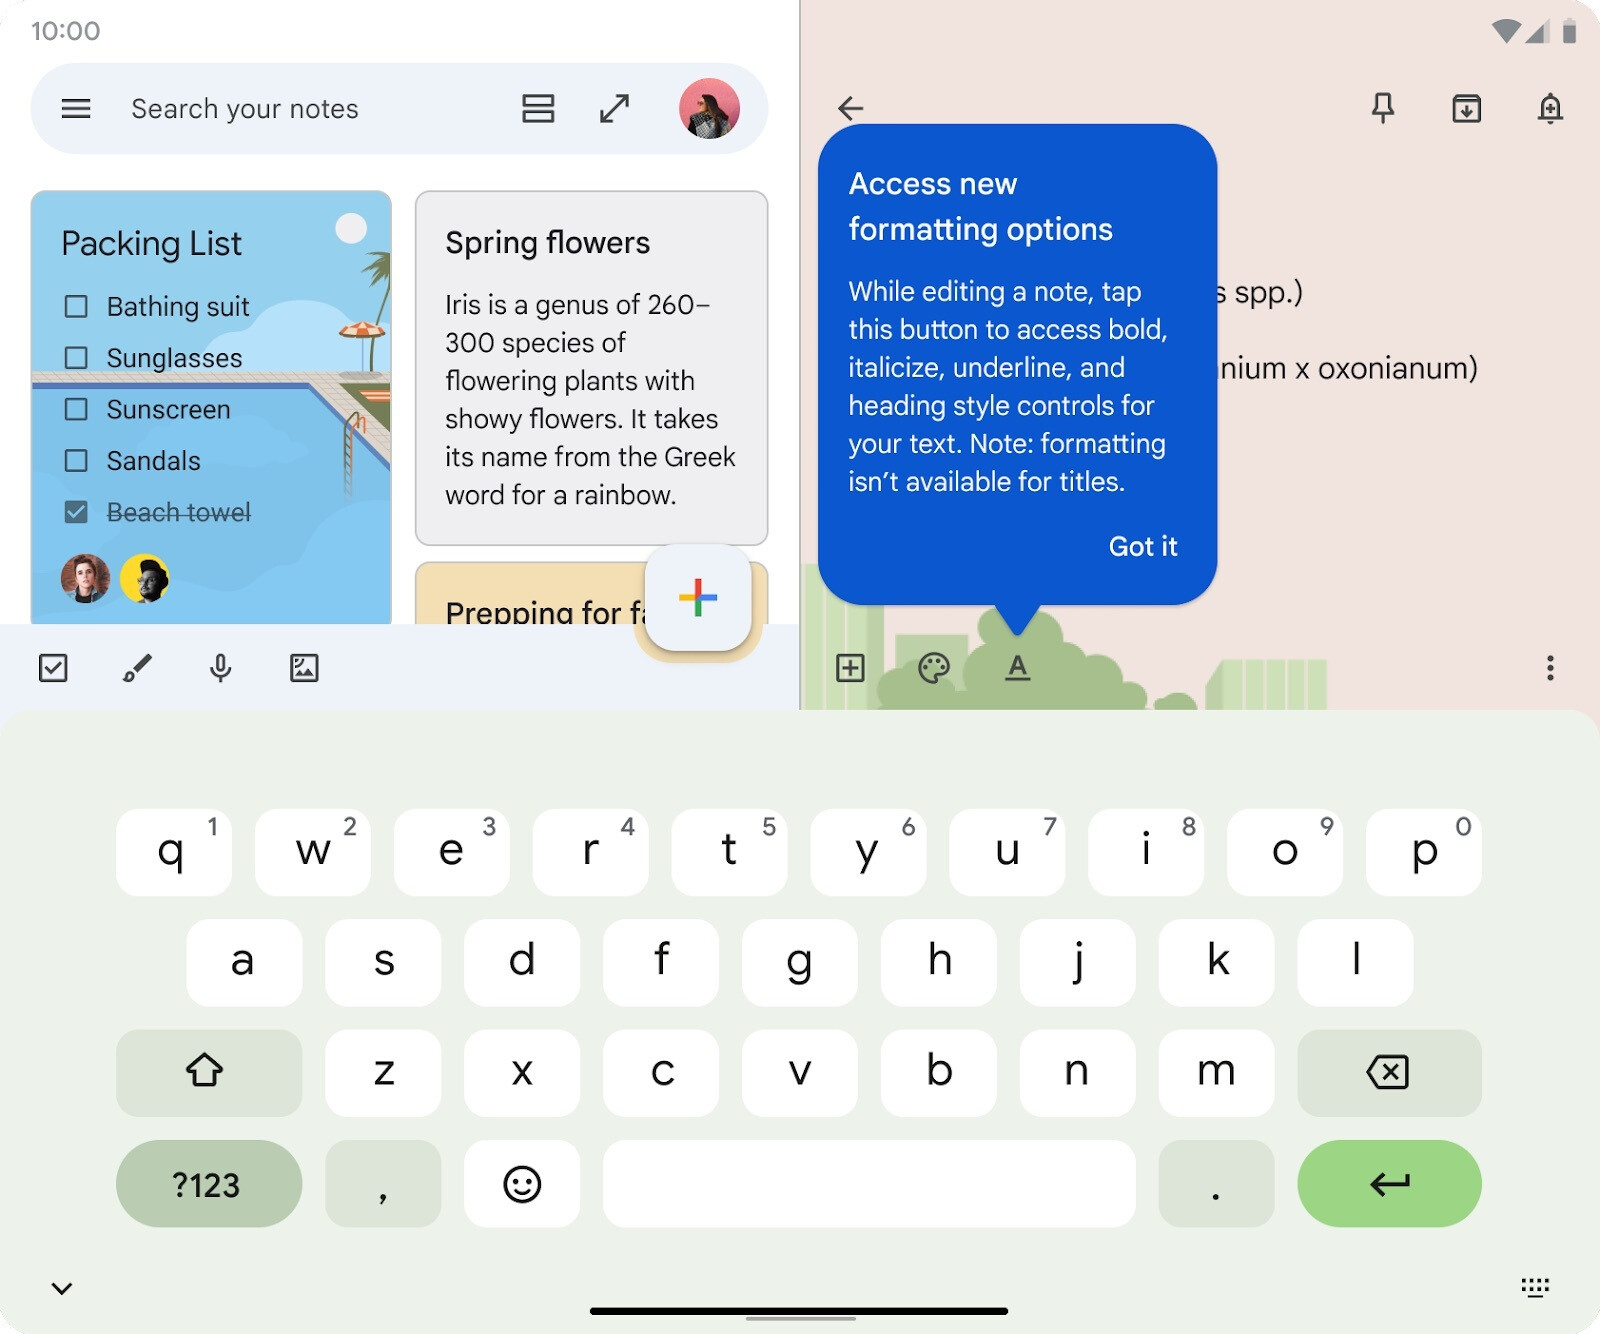 Quelle – Google – Google kündigt Rich-Text-Formatierung für Keep Notes auf Android an